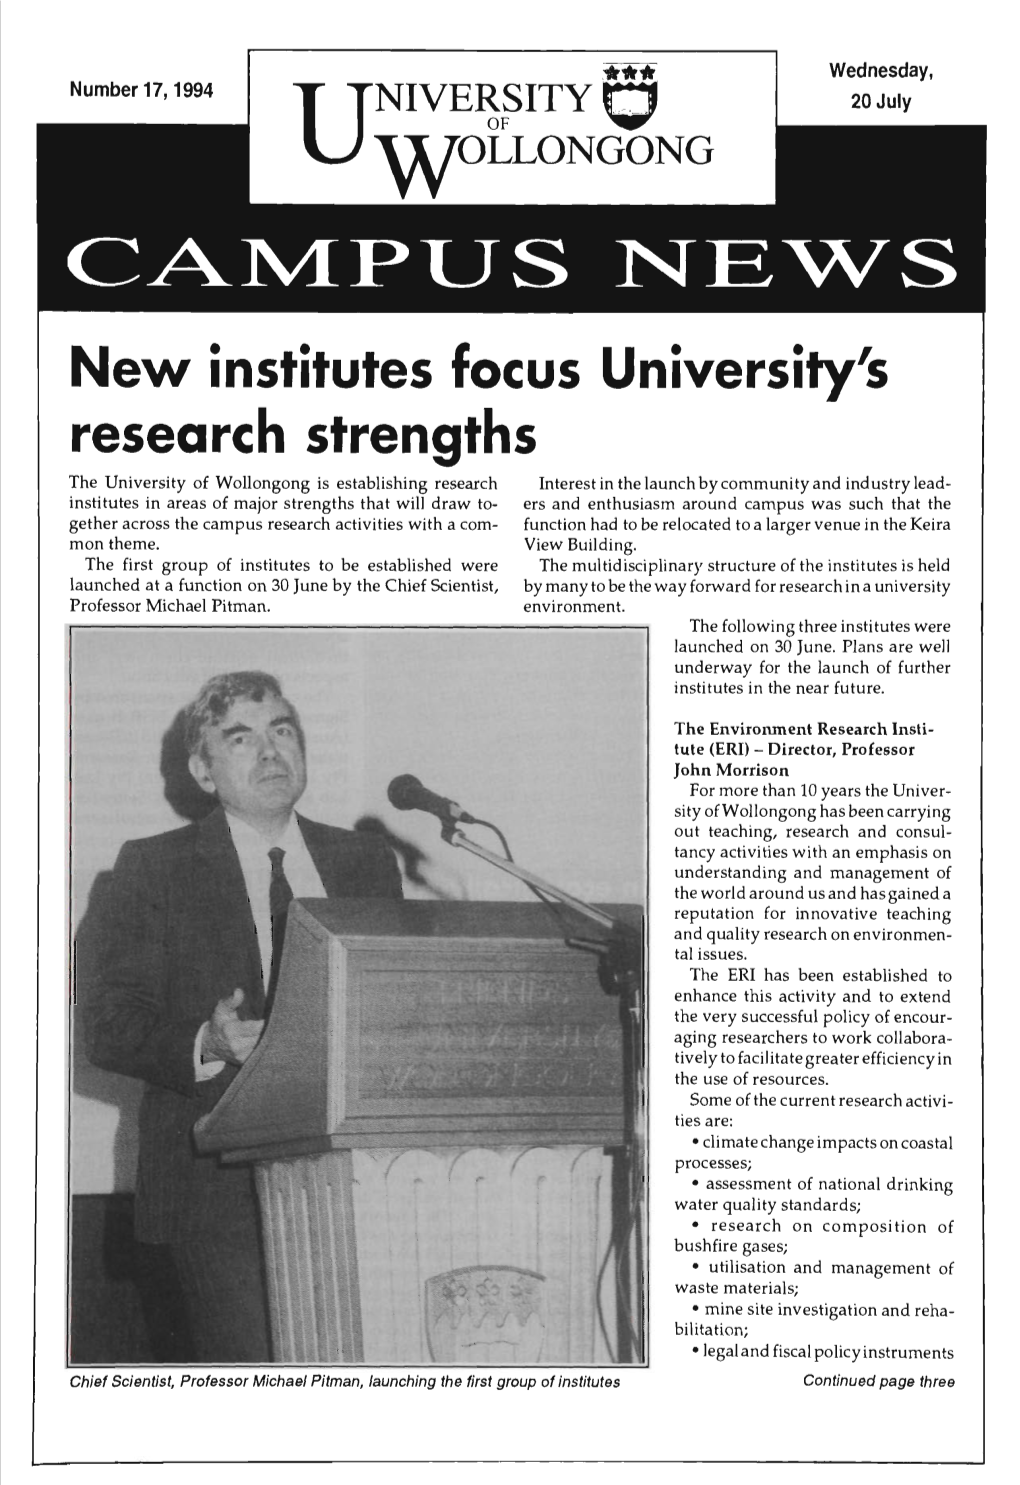 University of Wollongong Campus News 20 July 1994